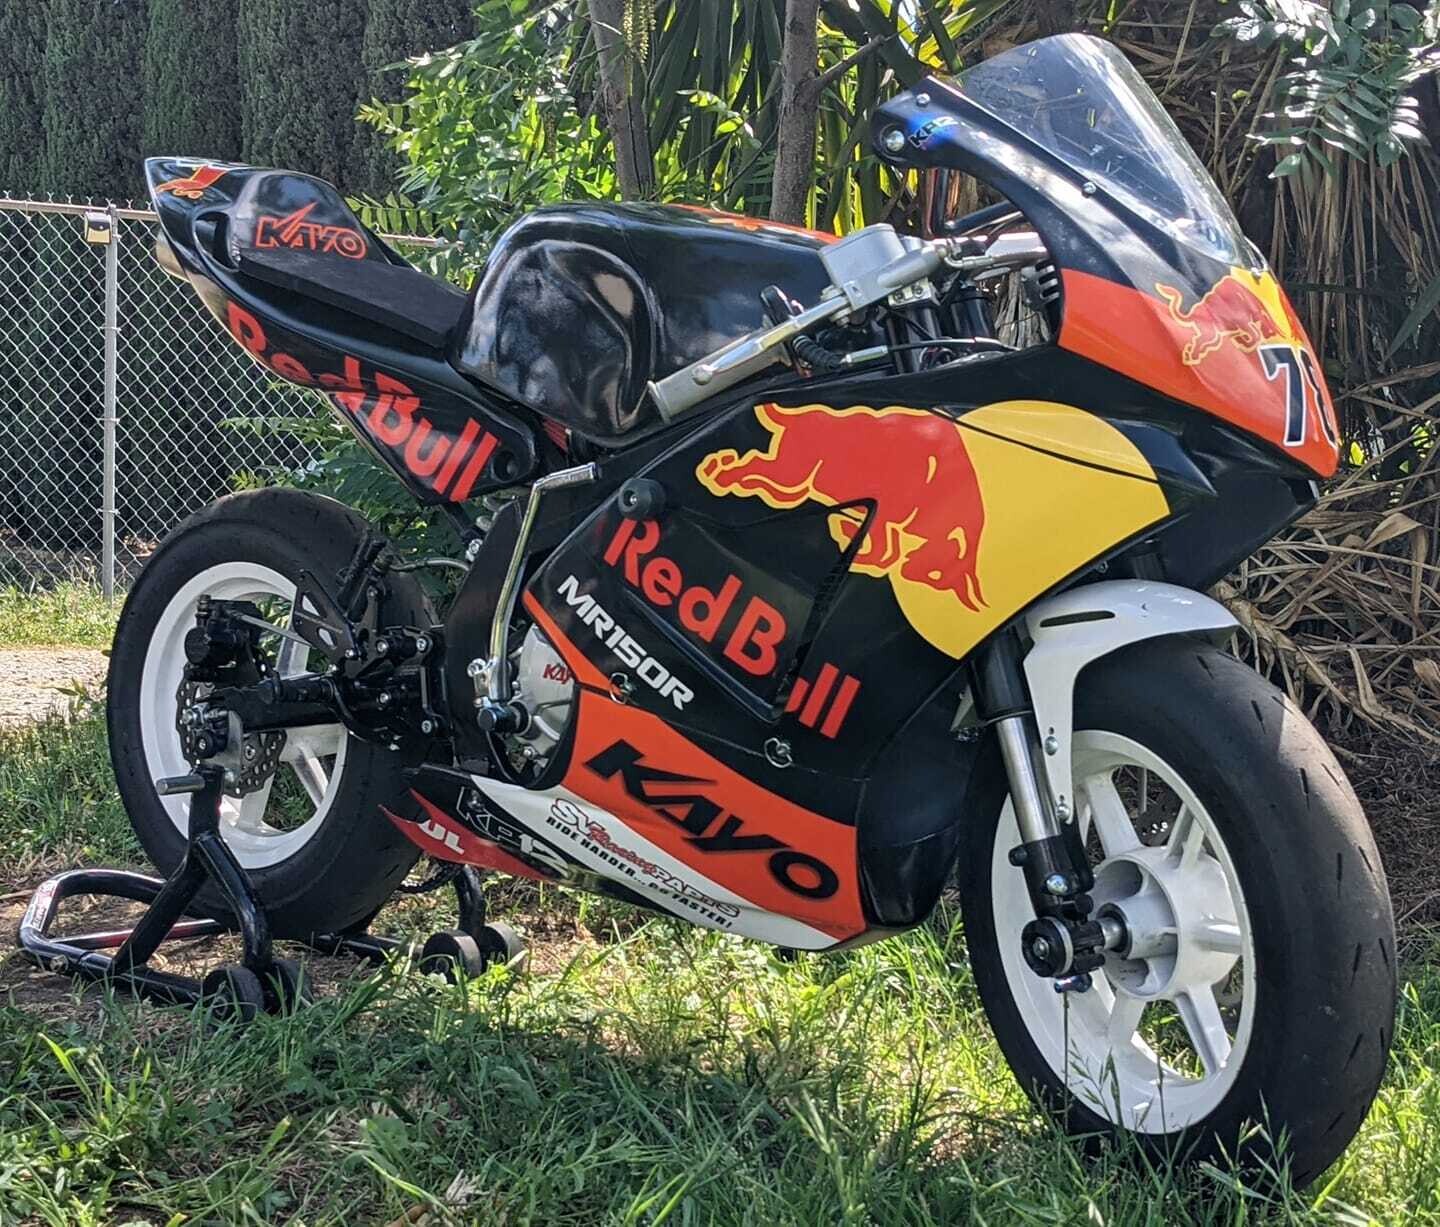 SV Racing Parts | Store | KAYO MiniGP MR150R - Red Bull MotoGP Style  Tribute - Race/Training Bike